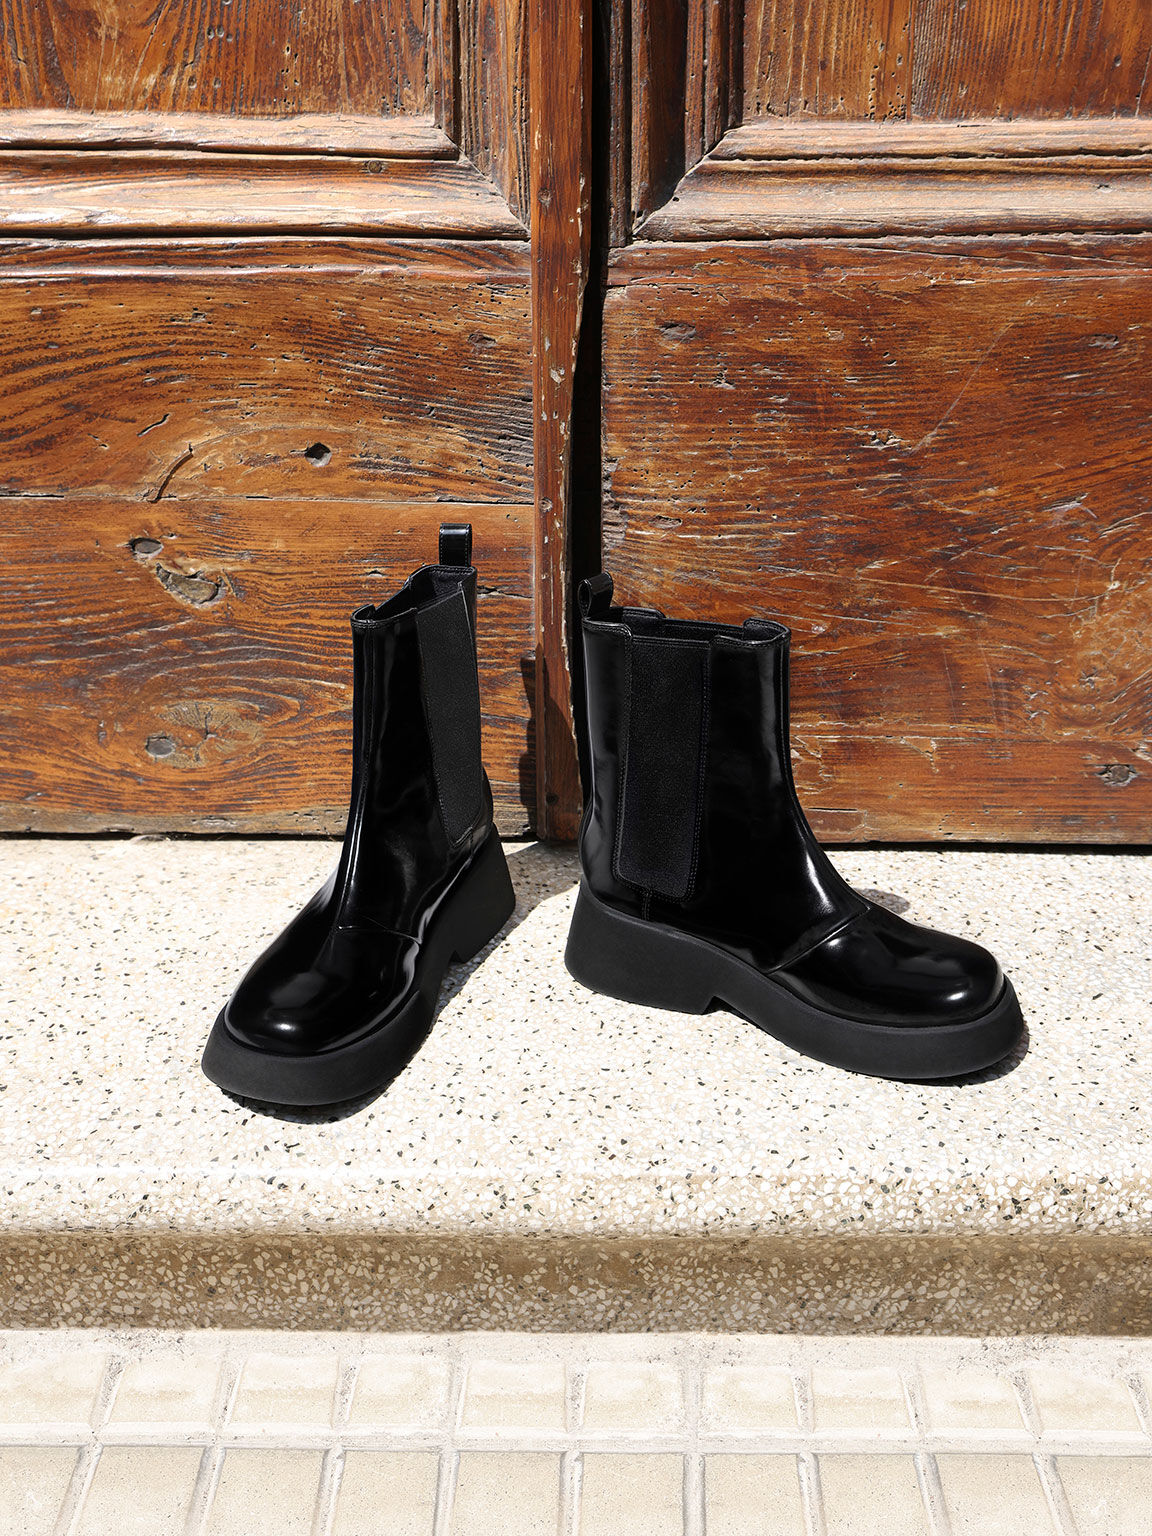 Giselle Patent Chelsea Boots - Black Patent